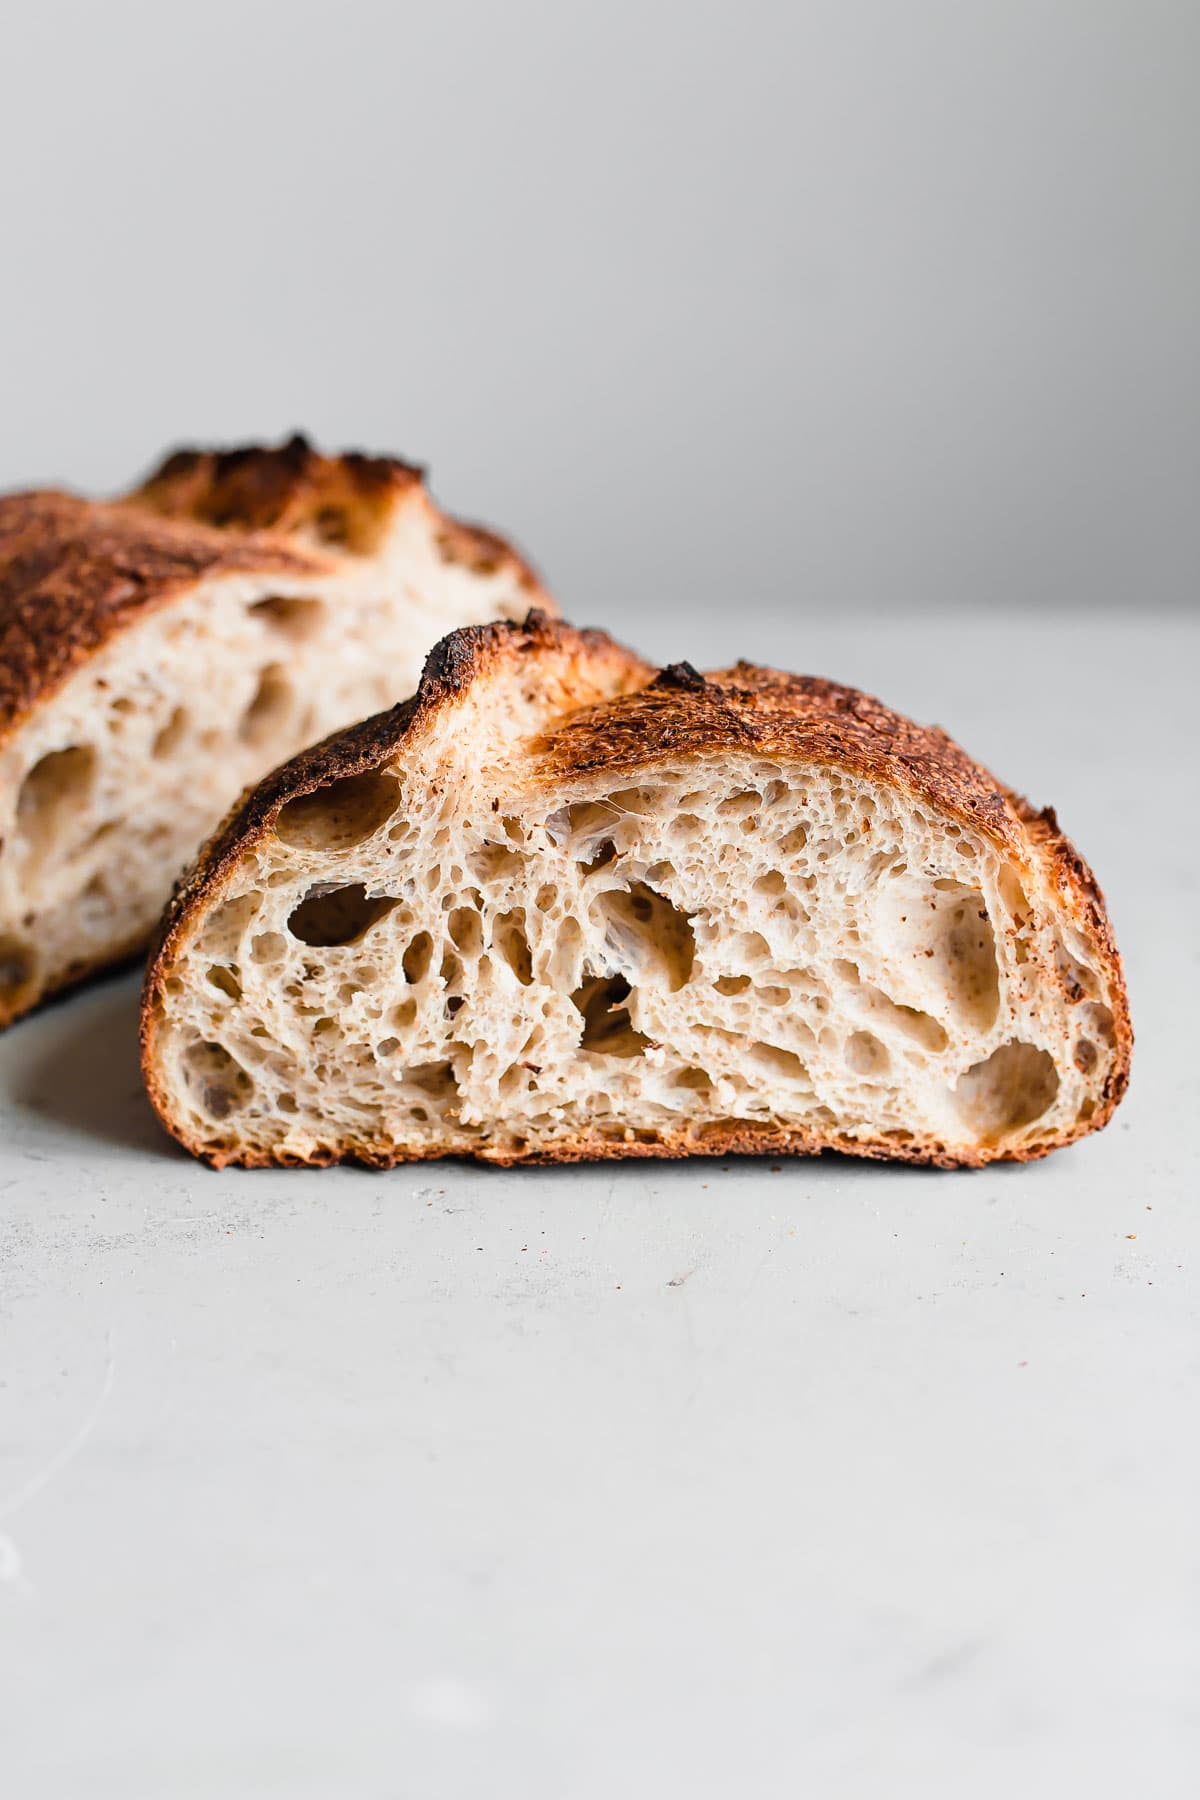 https://www.abeautifulplate.com/wp-content/uploads/2020/02/artisan-sourdough-bread-recipe-1-34.jpg